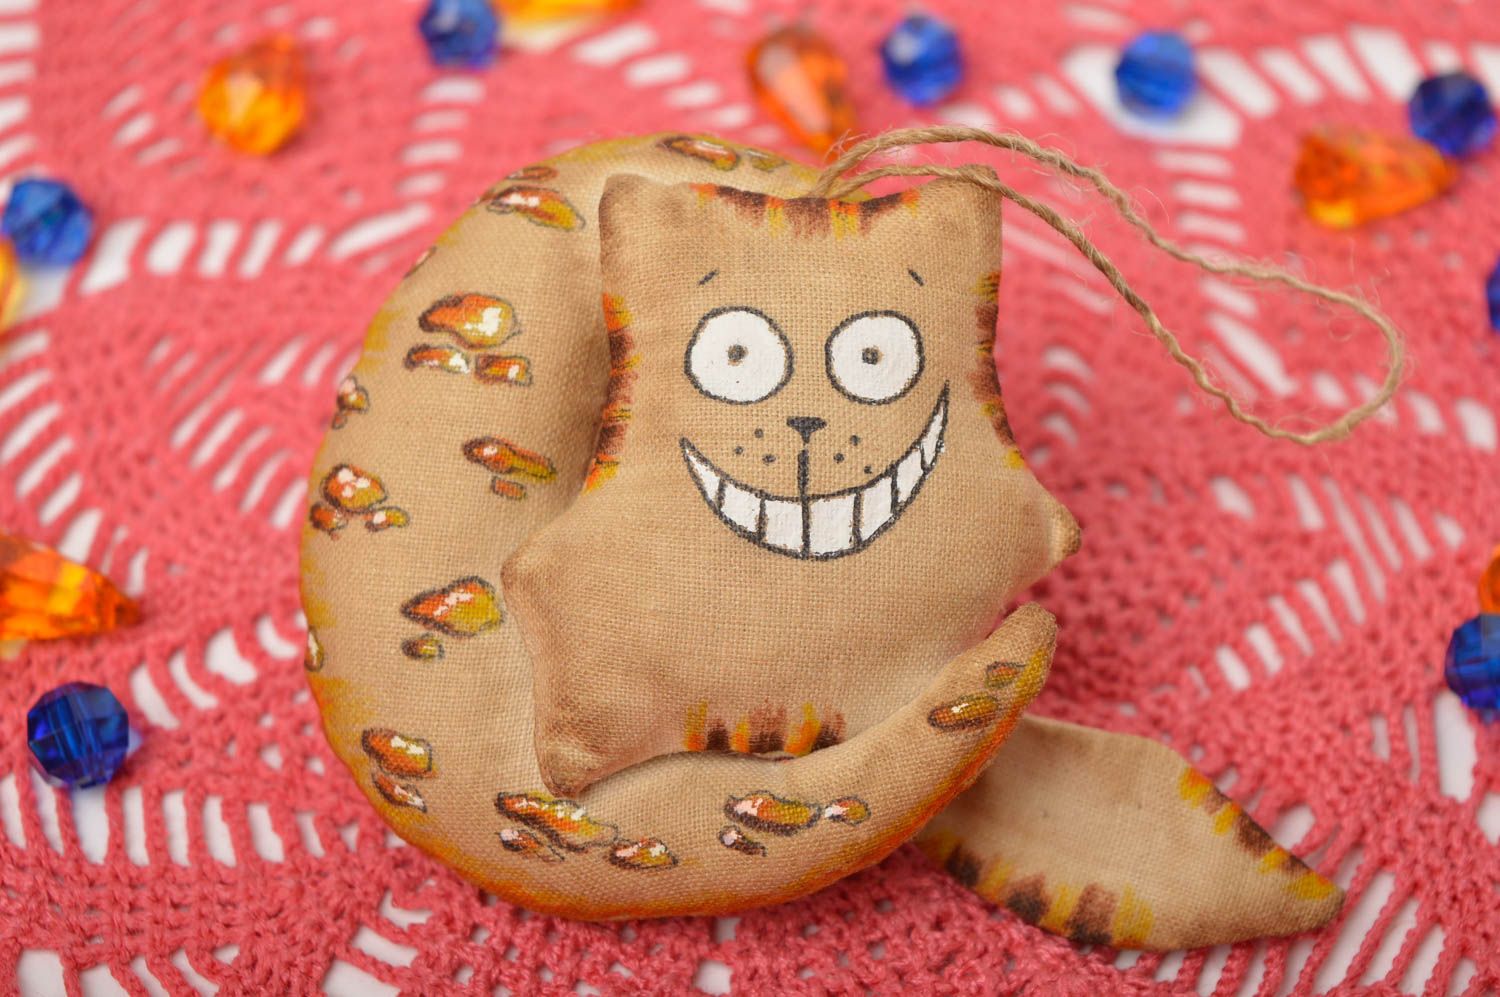 Handmade cat toy interesting cute home decor unusual designer accessories photo 1